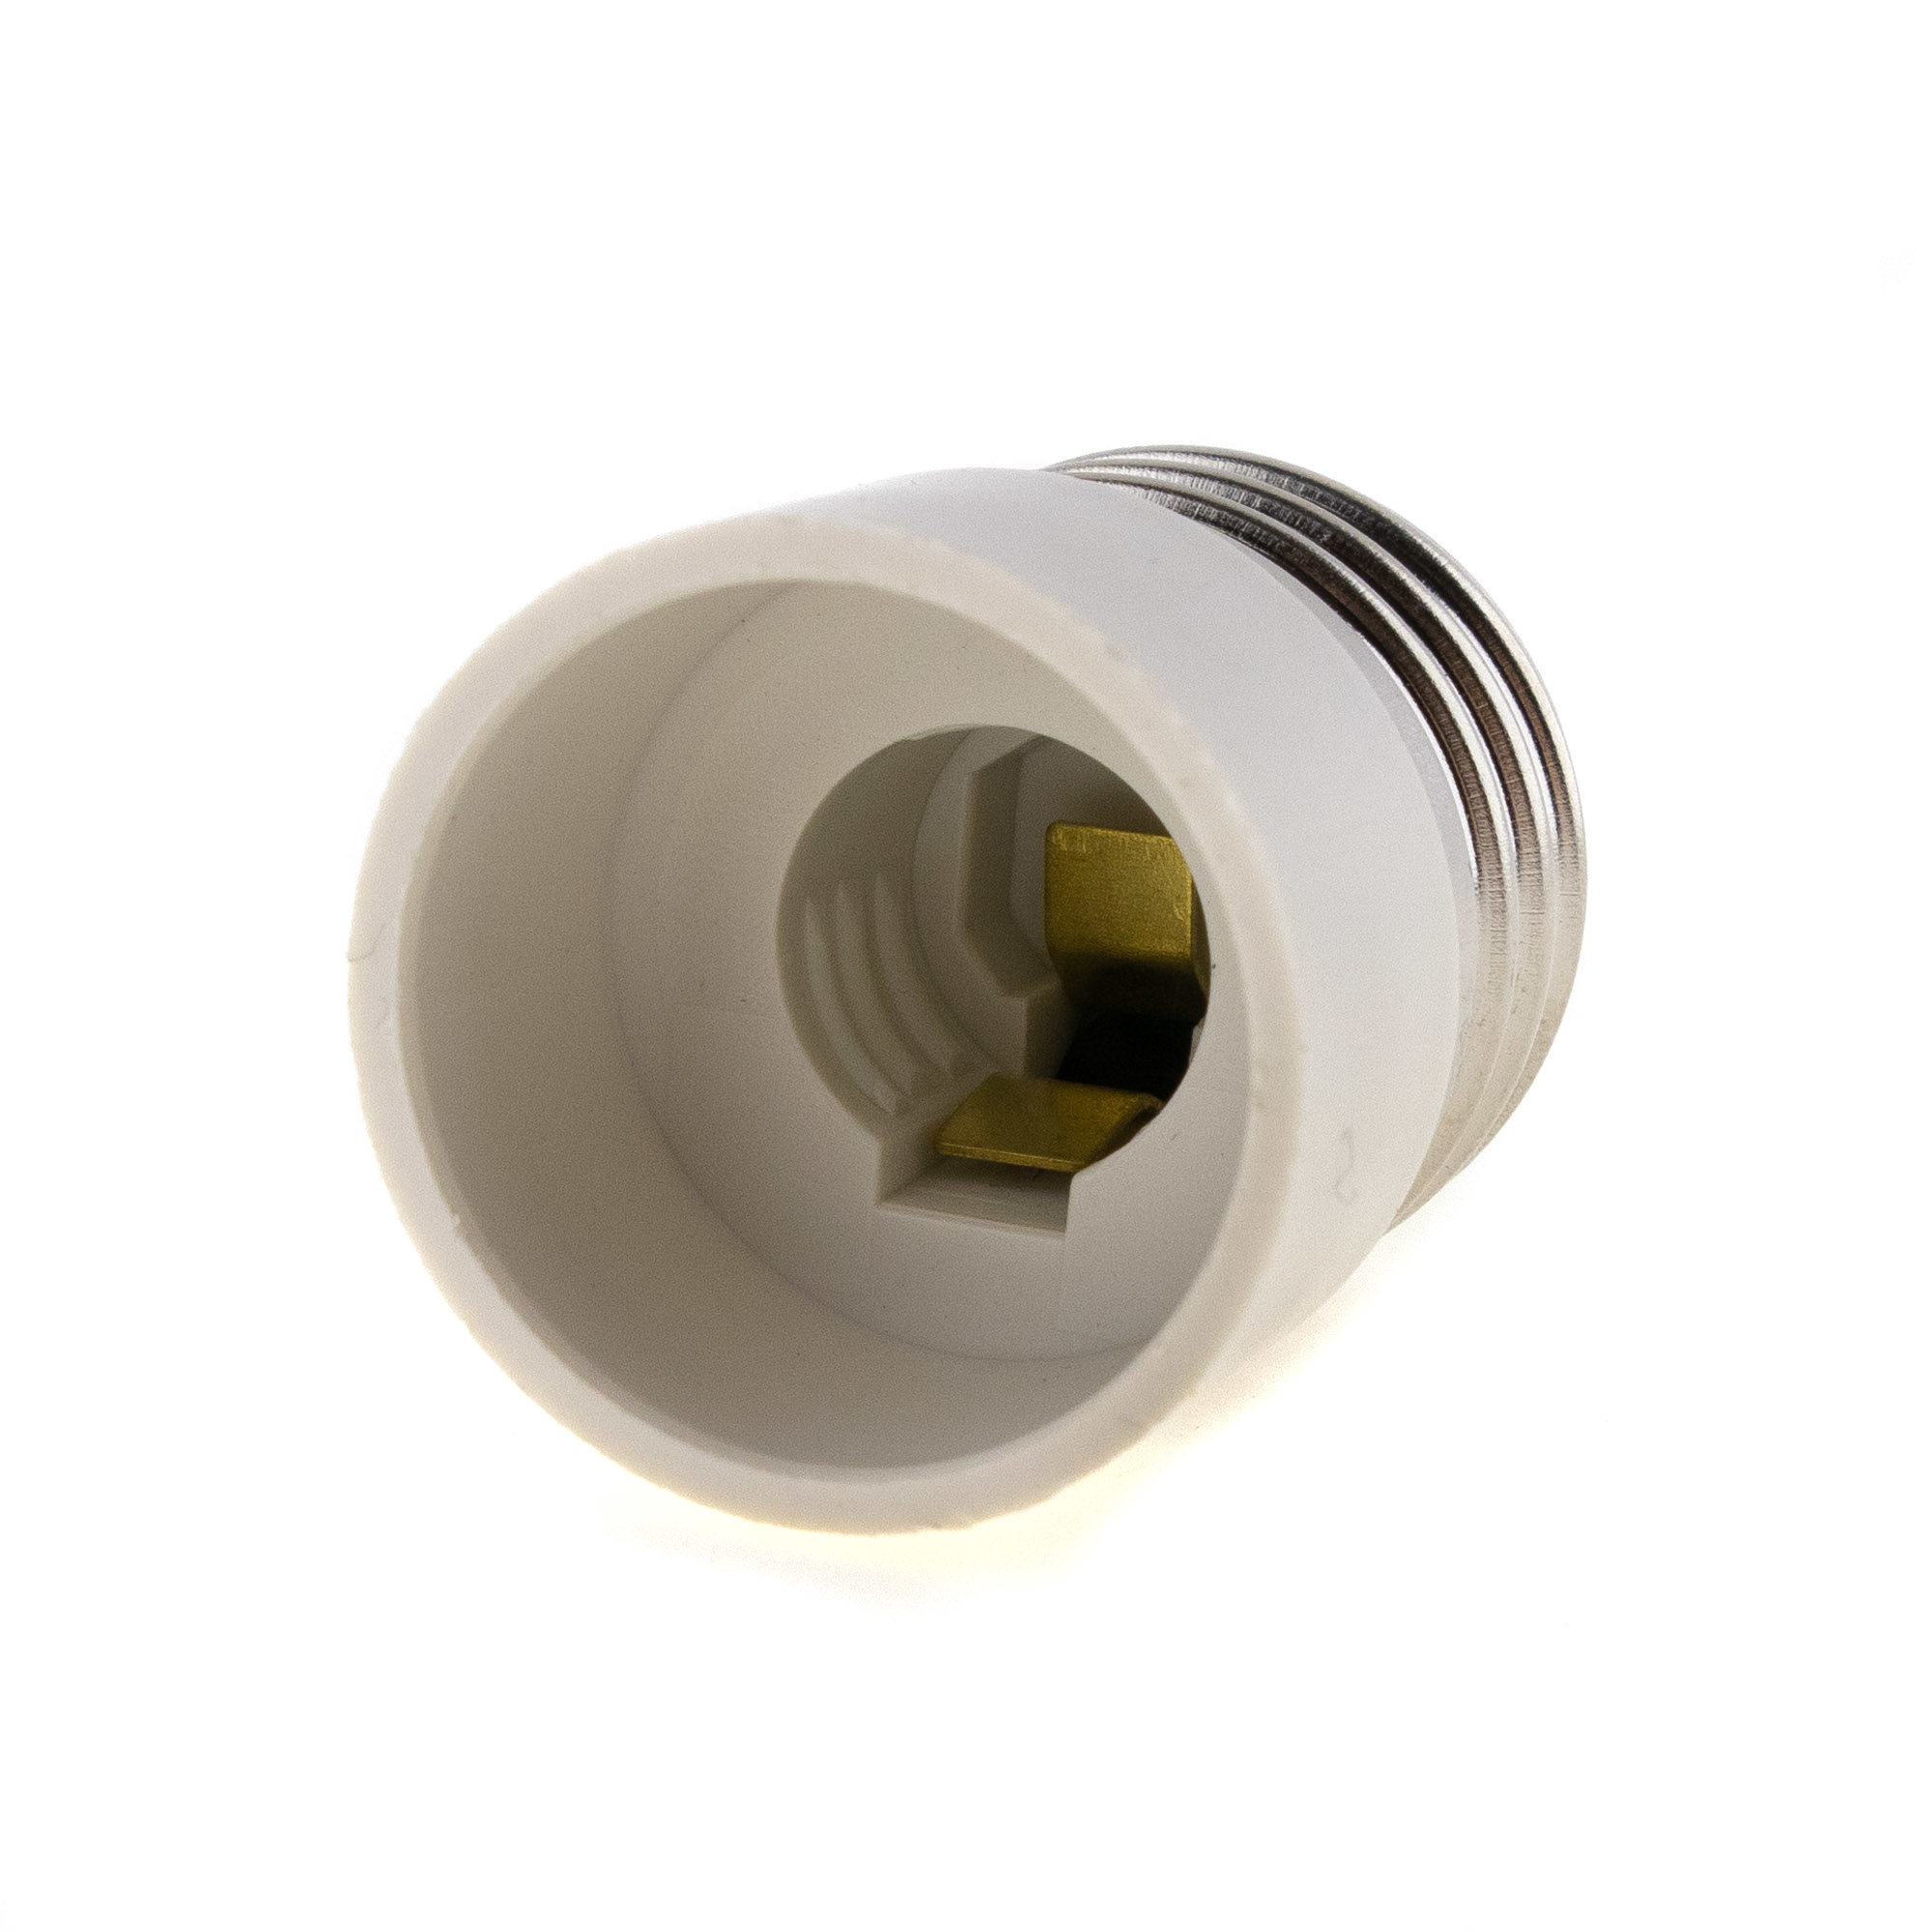 Lamp socket adaptor E27 to E14 - 4PCS